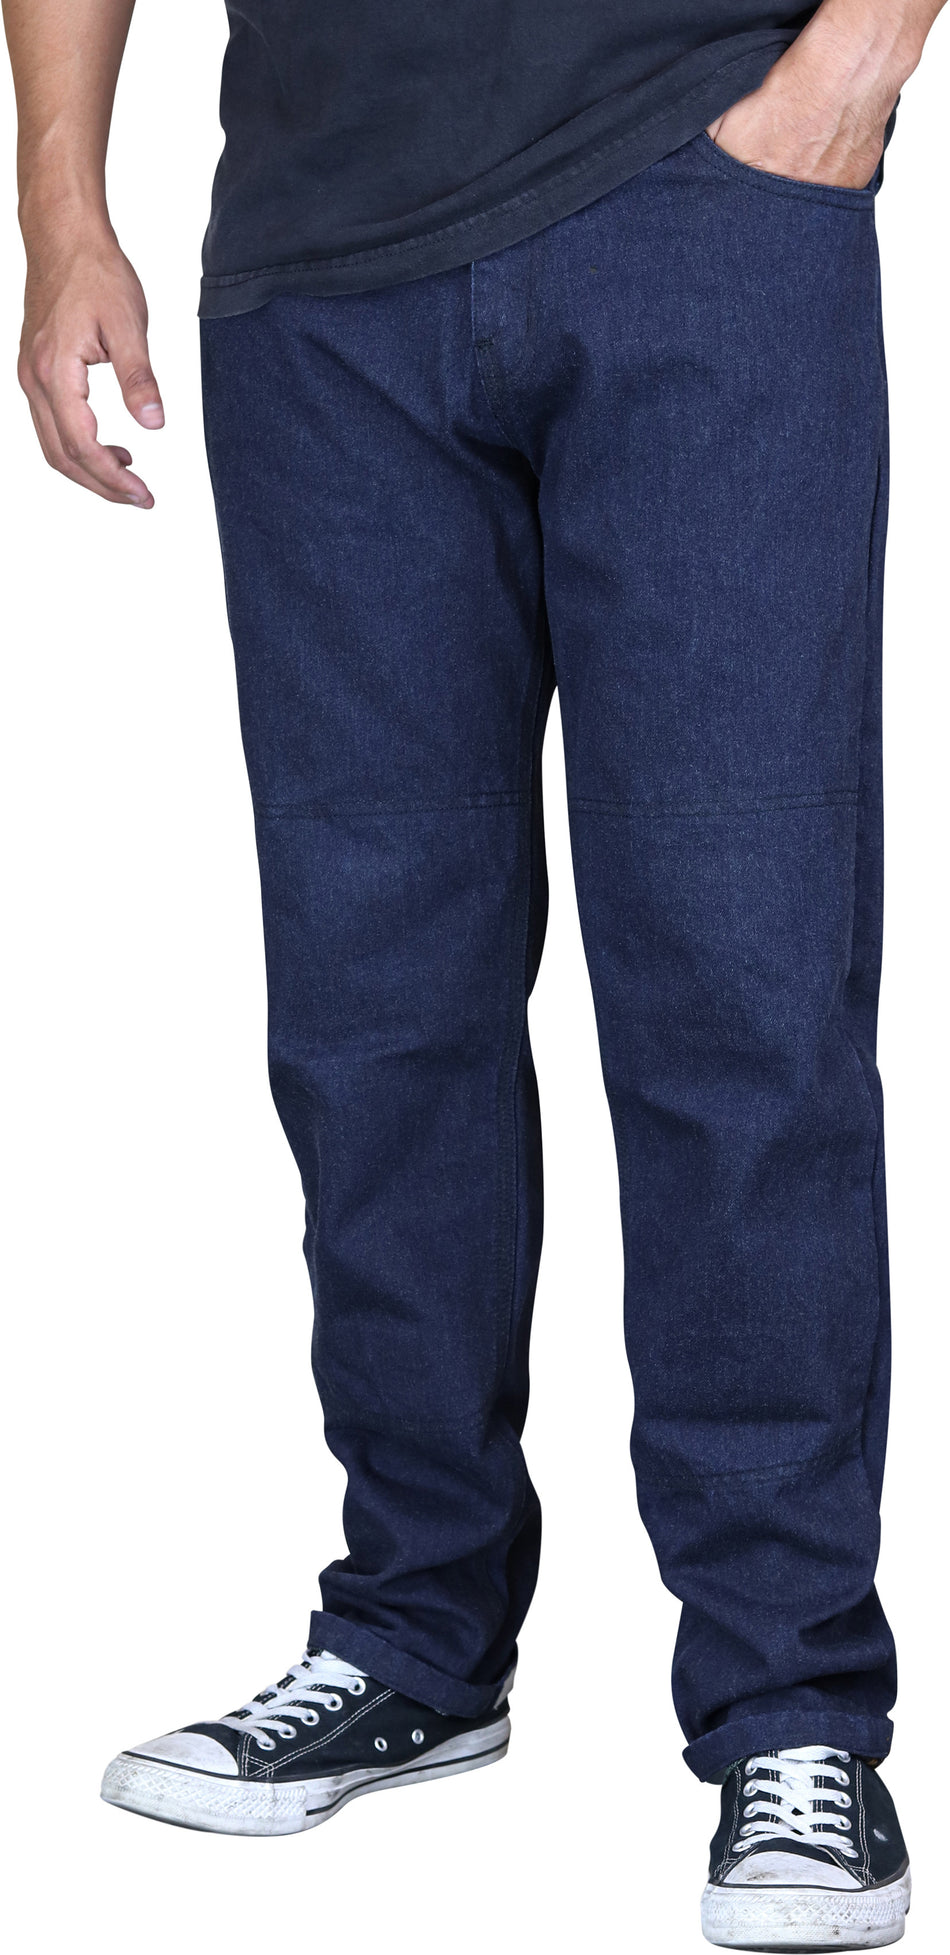 SCORPION EXO Covert Ultra Jeans Blue Size 40 4402-40